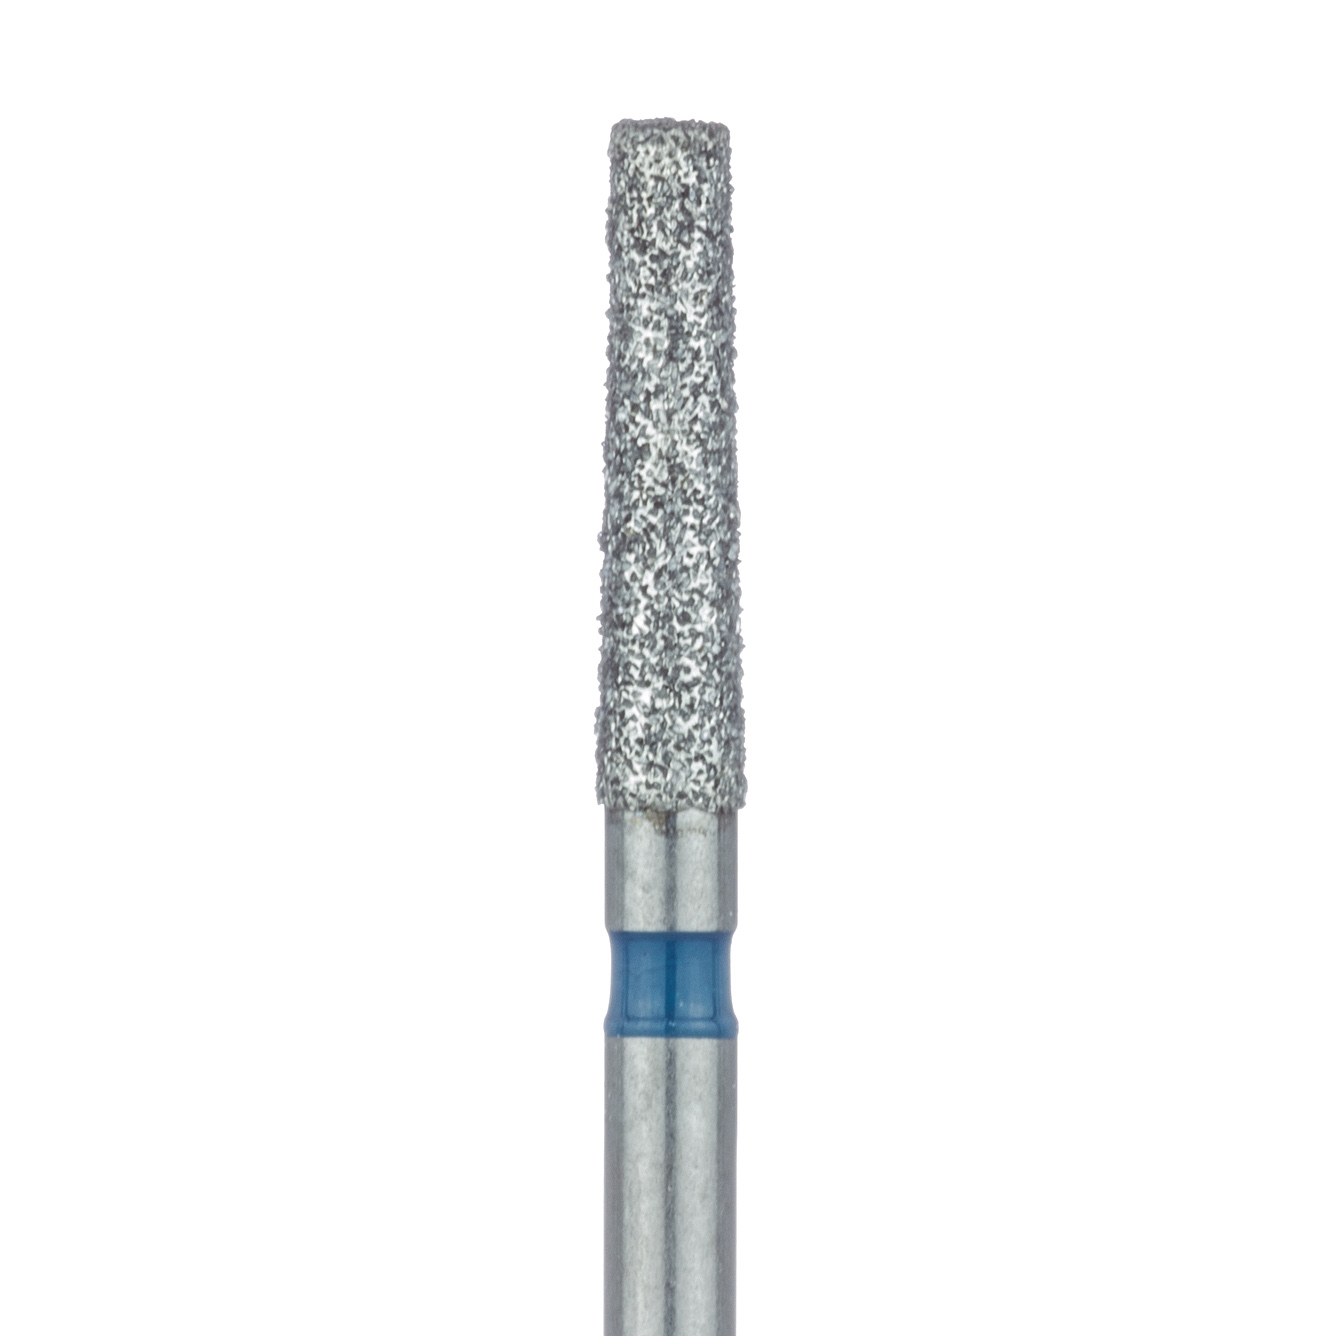 847-018-FG Long Tapered Flat End Diamond Bur, 1.8mm Ø, Medium, FG